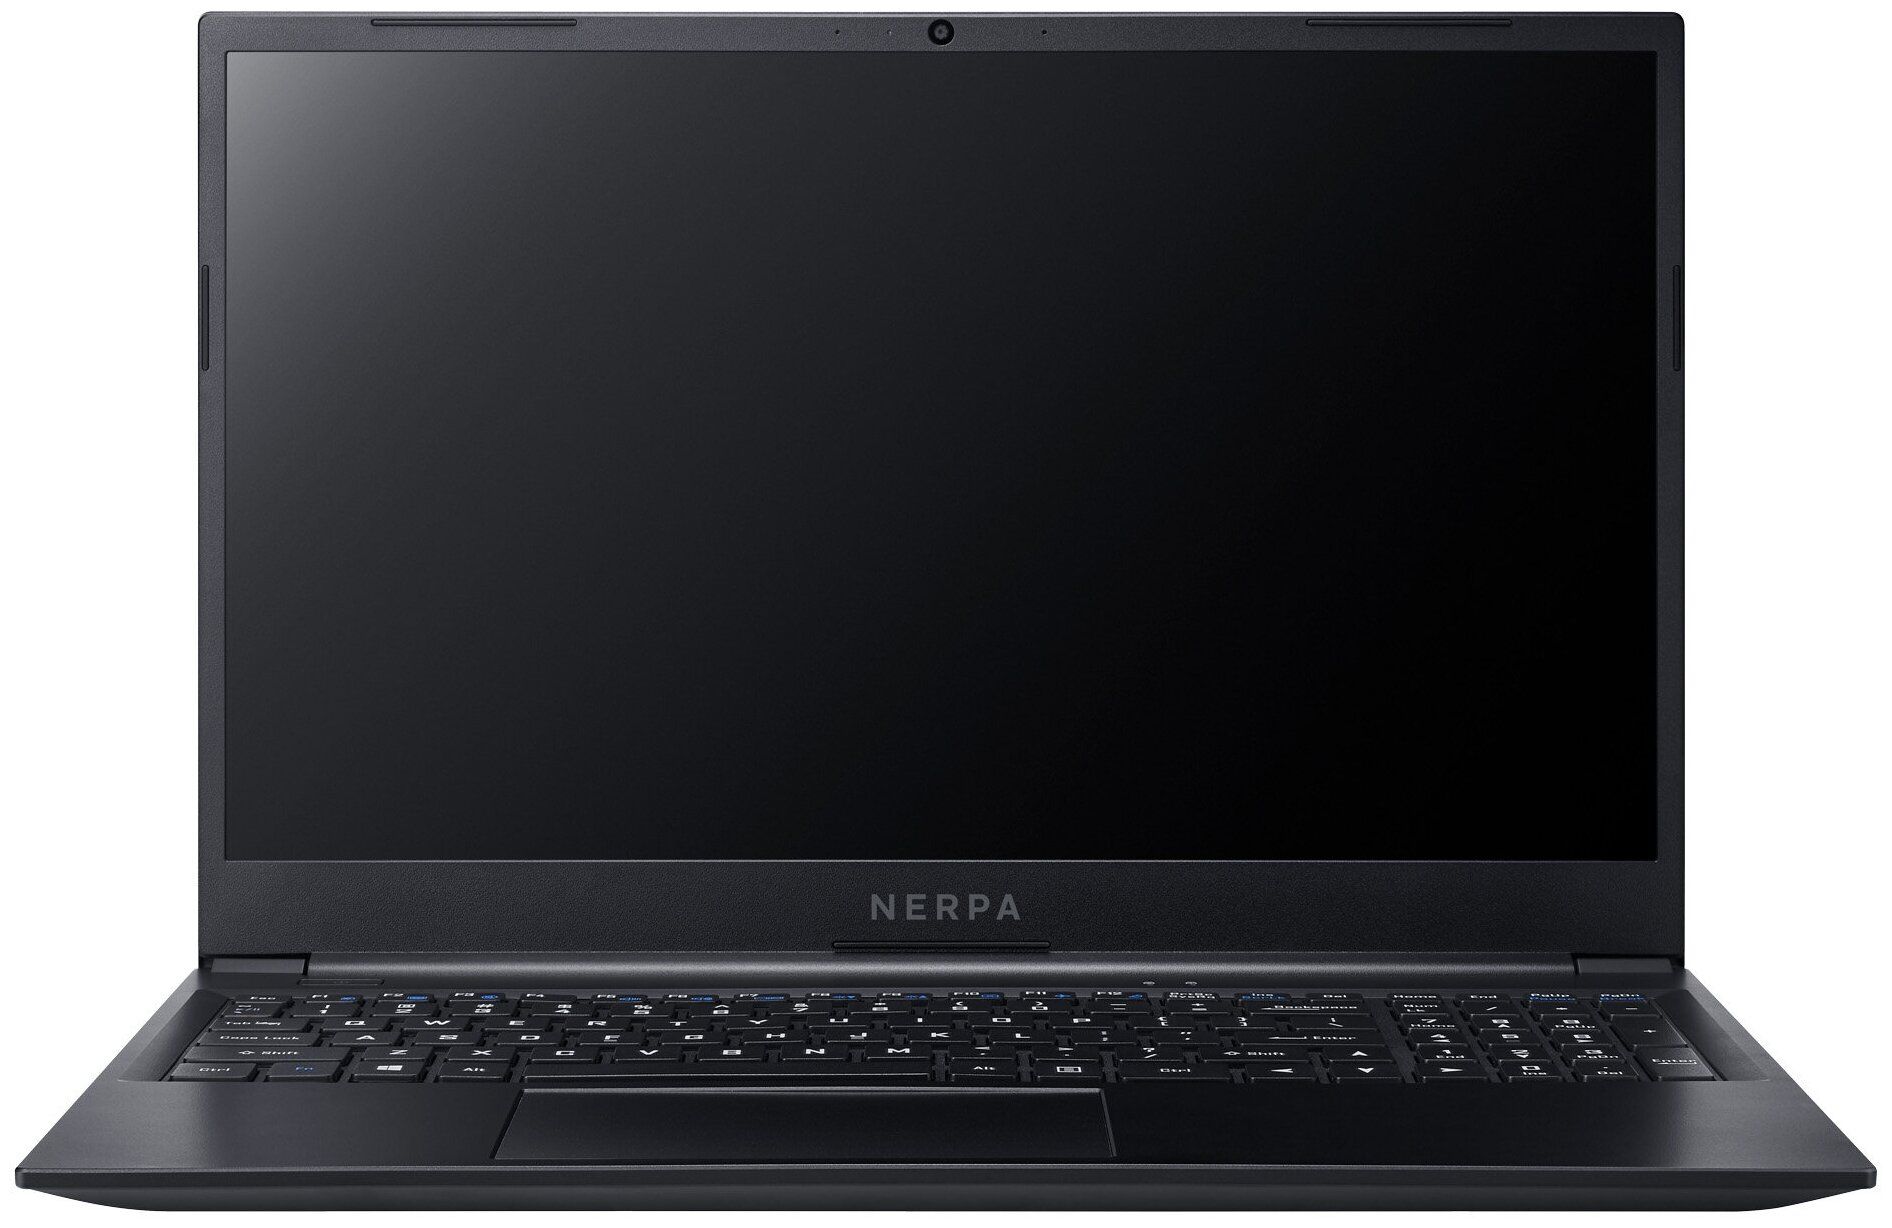 Ноутбук Nerpa Caspica A552-15 15.6 Titanium Black (A552-15AA085100K) ноутбук nerpa caspica a552 15 noos black a552 15aa085100k